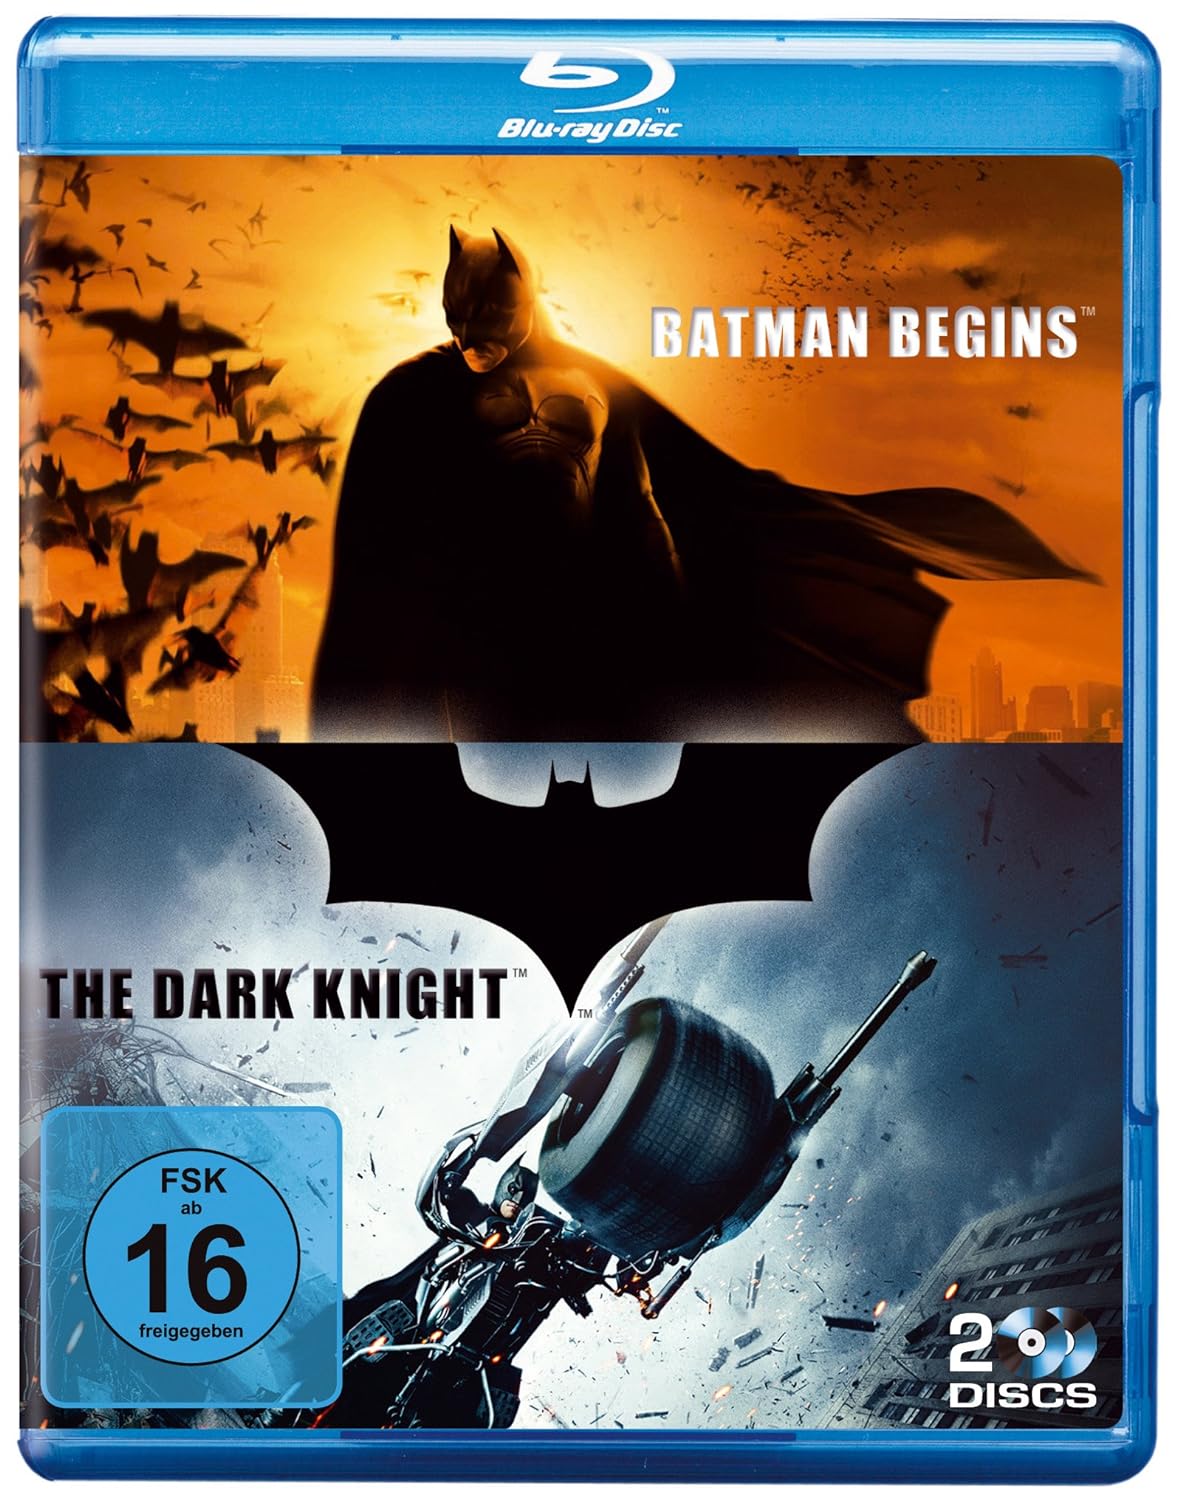 The Dark Knight & Batman Begins (2 Discs) (Blu-ray)